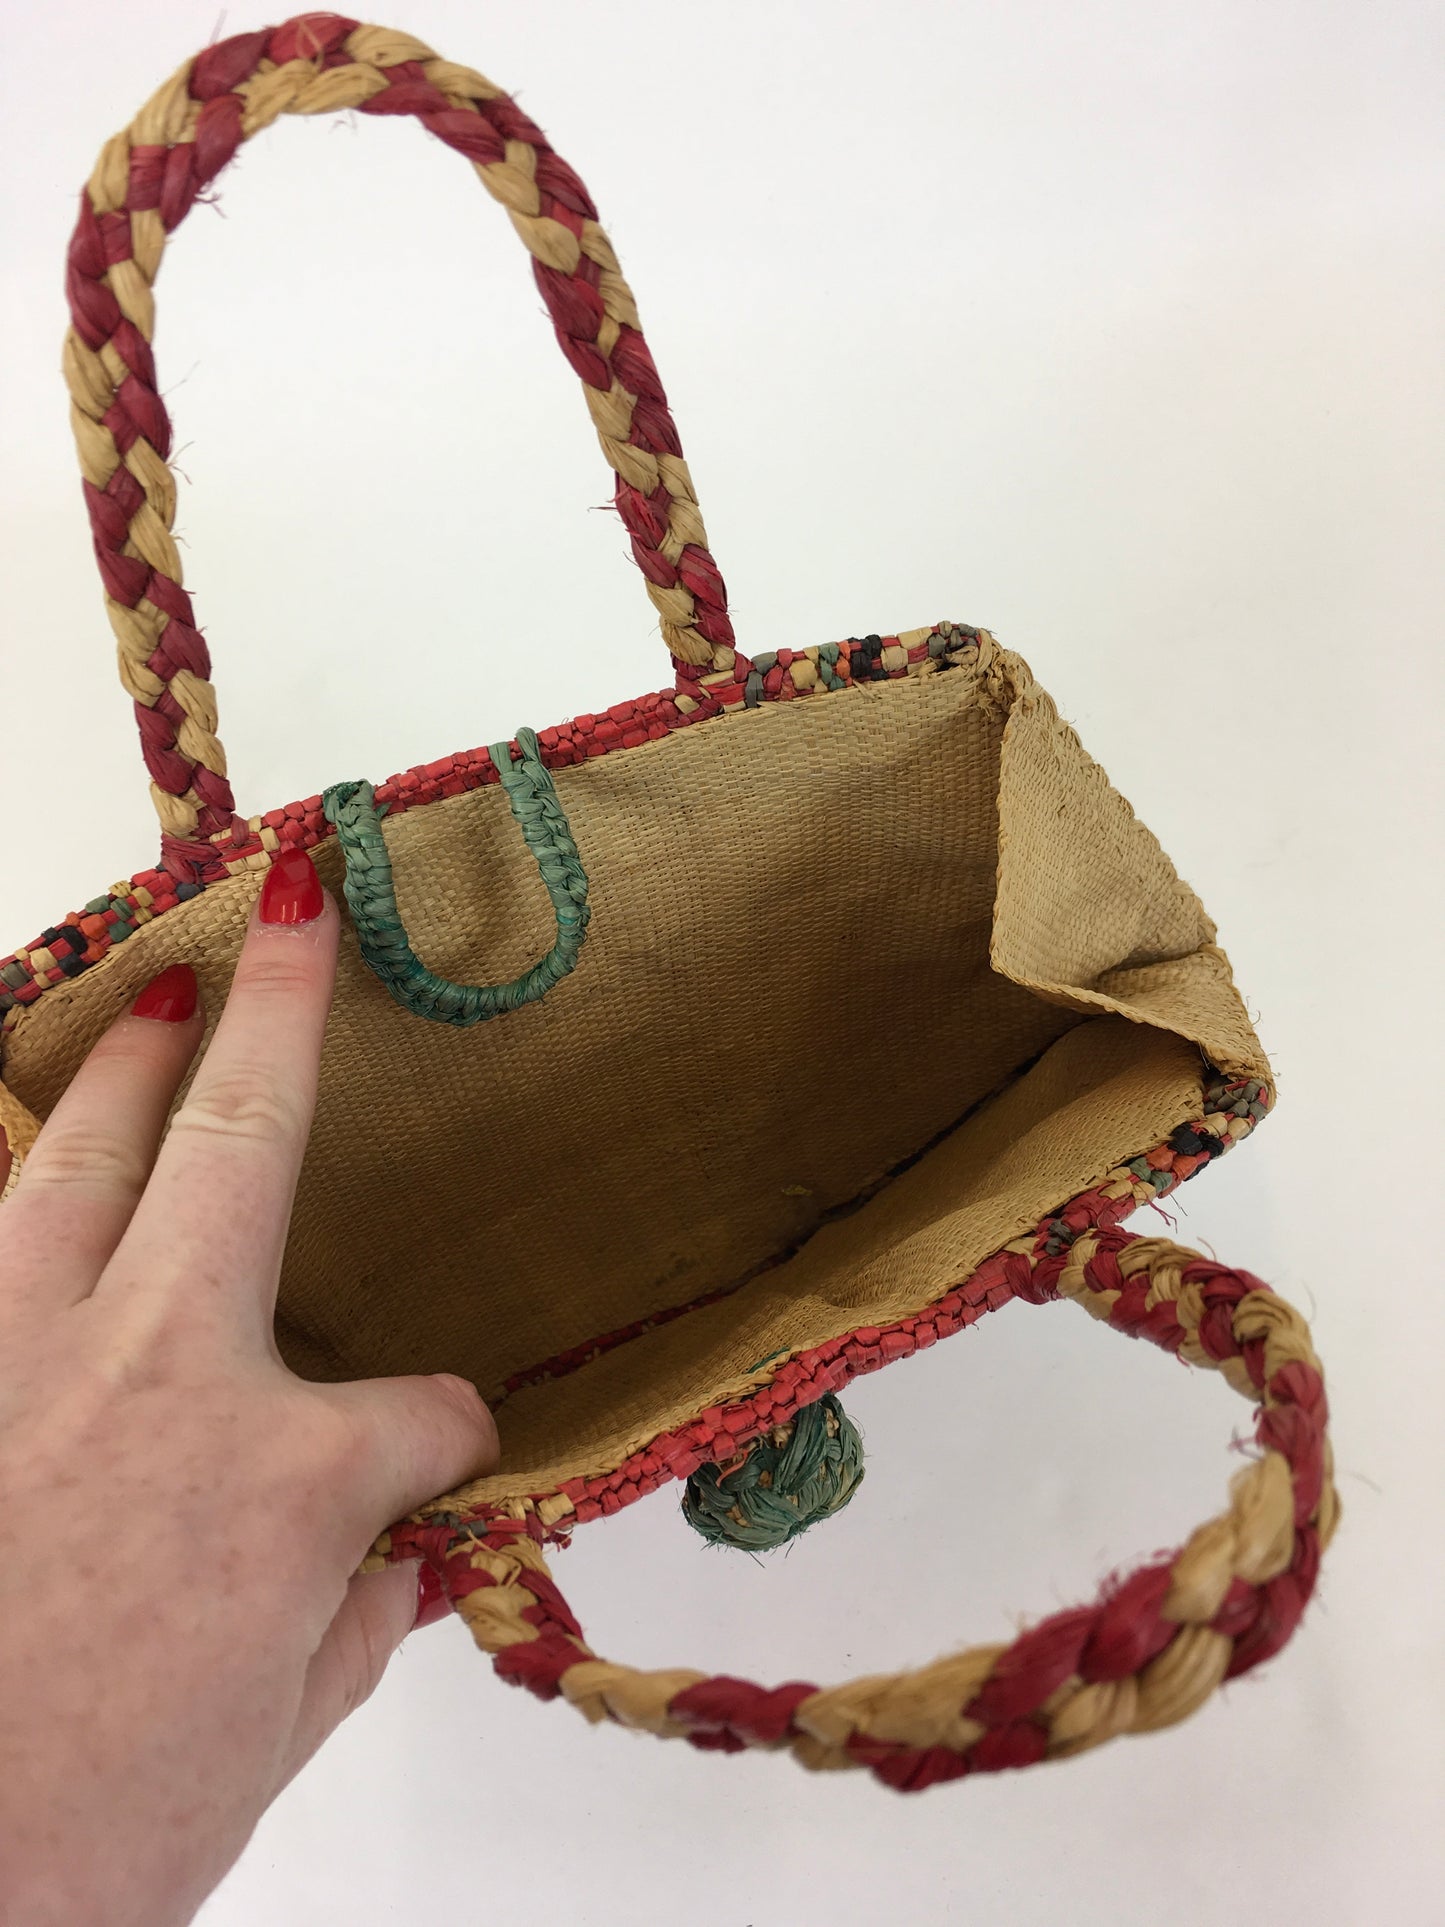 Original 1930’s/ 1940’s Raffia Straw Handbag - In Multicoloured Tones